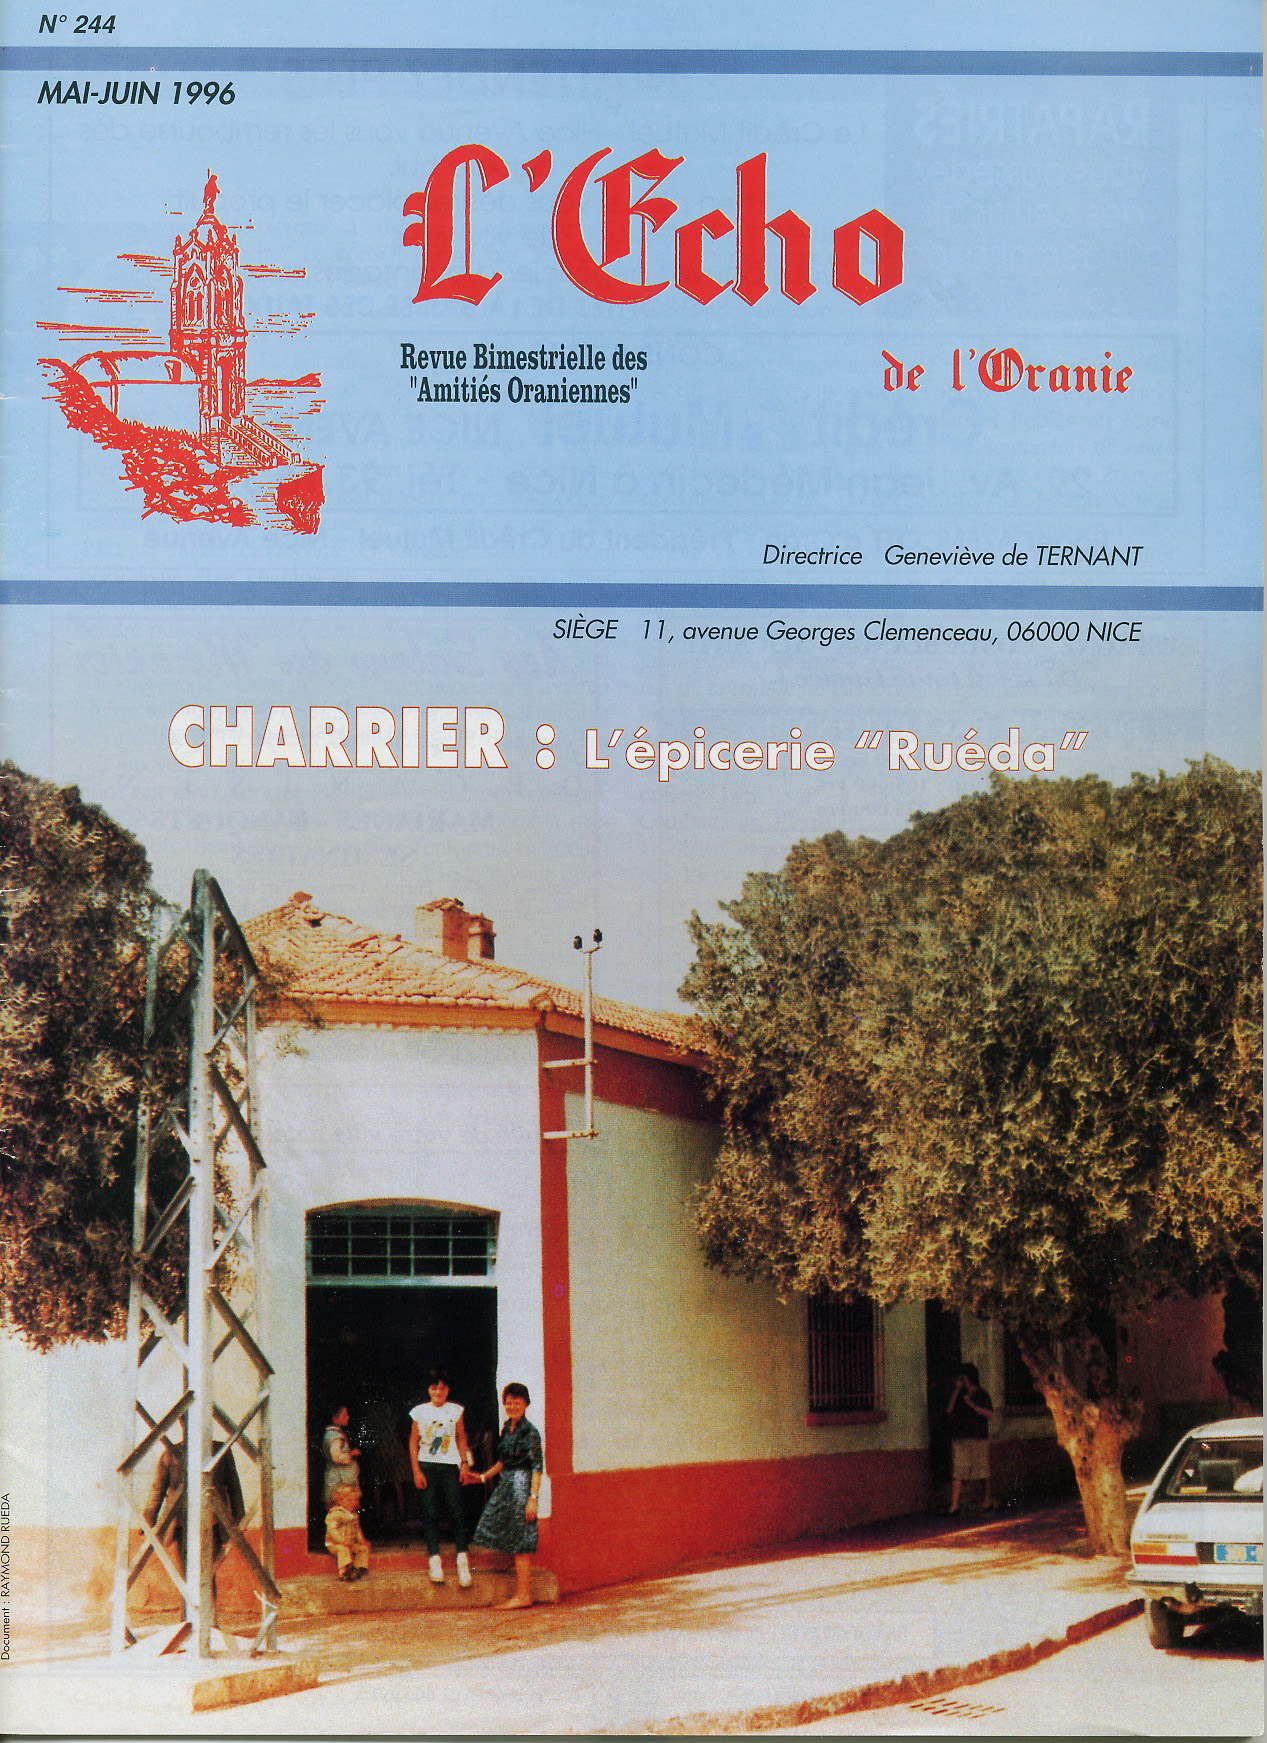 Echo de l'Oranie - n°244 - mai 1996